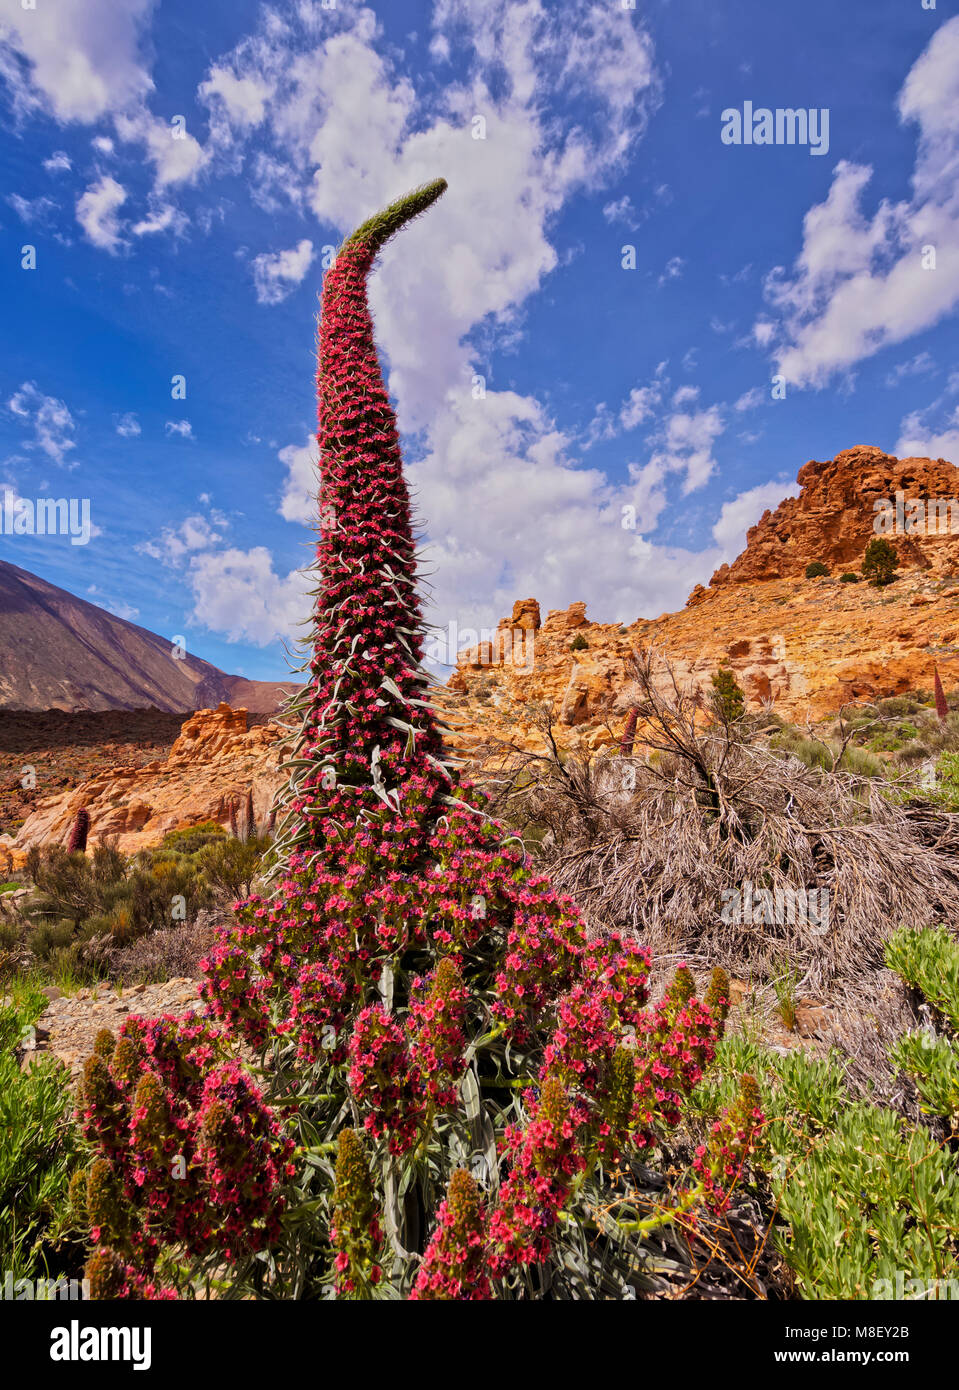 Tajinaste Rojo(Echium Wildpretii), endemic plant, Teide National Park, Tenerife Island, Canary Islands, Spain Stock Photo